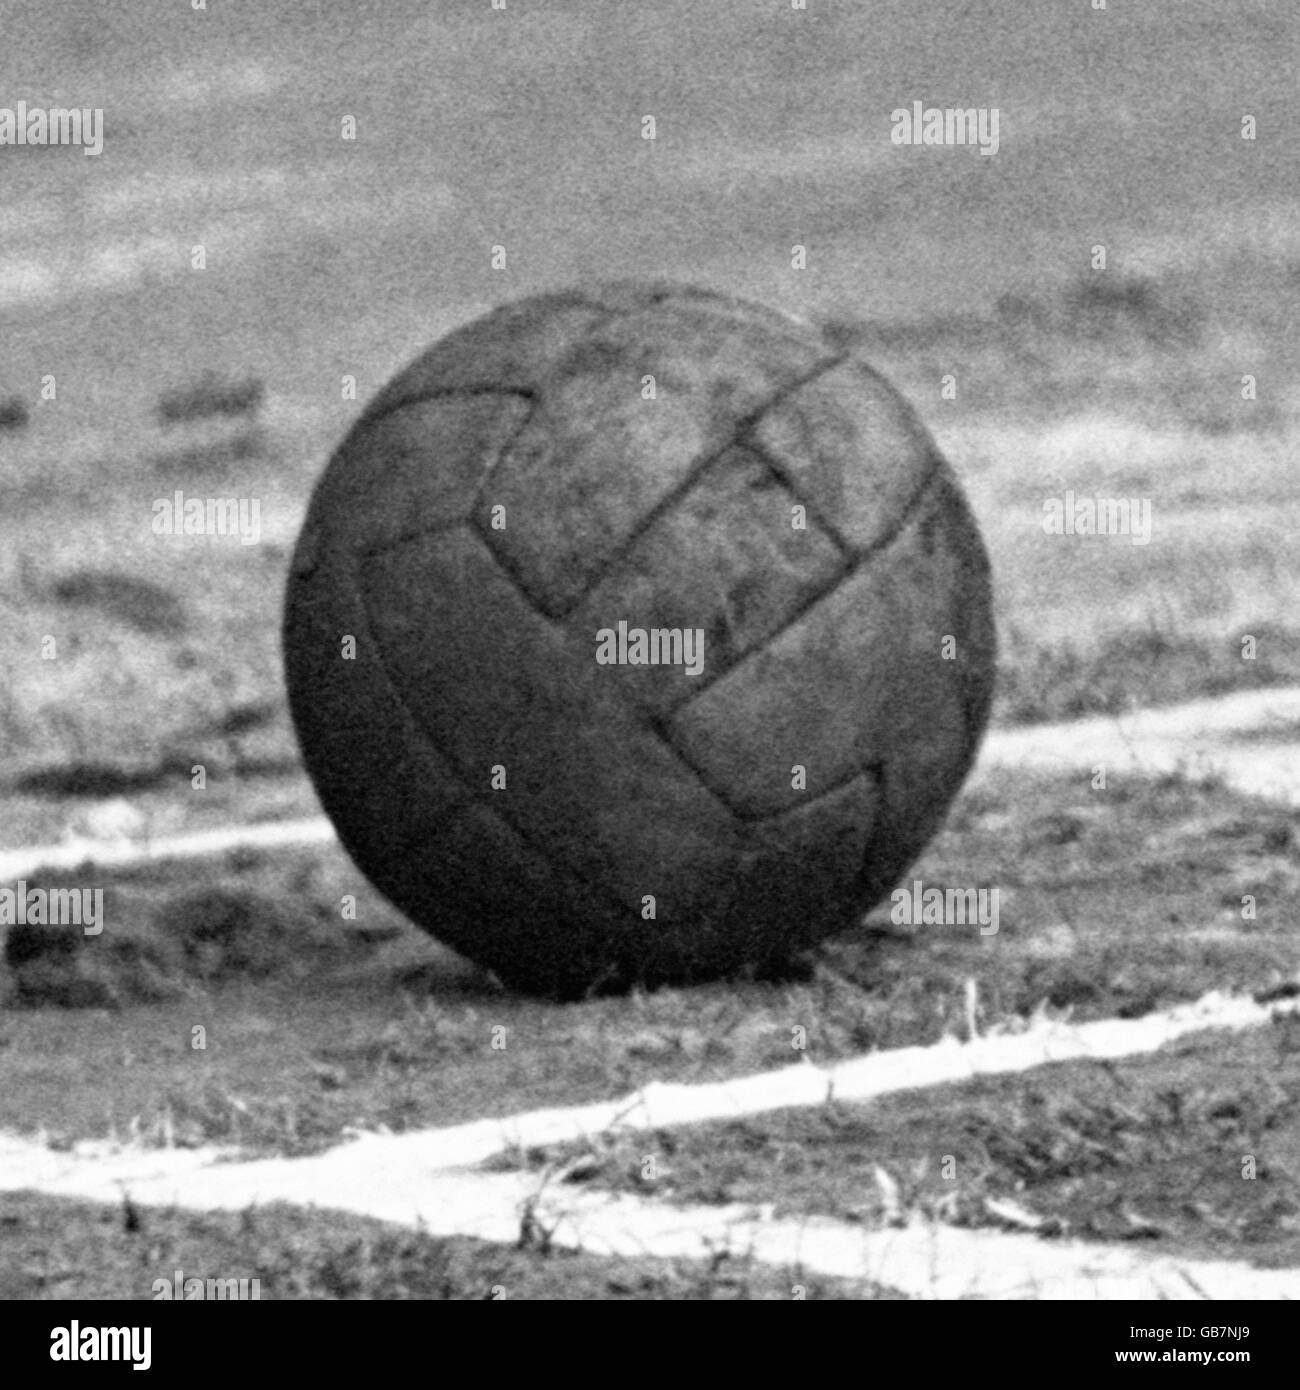 Football - stock. Photo d'un ballon de football de la saison 1950/51. Banque D'Images